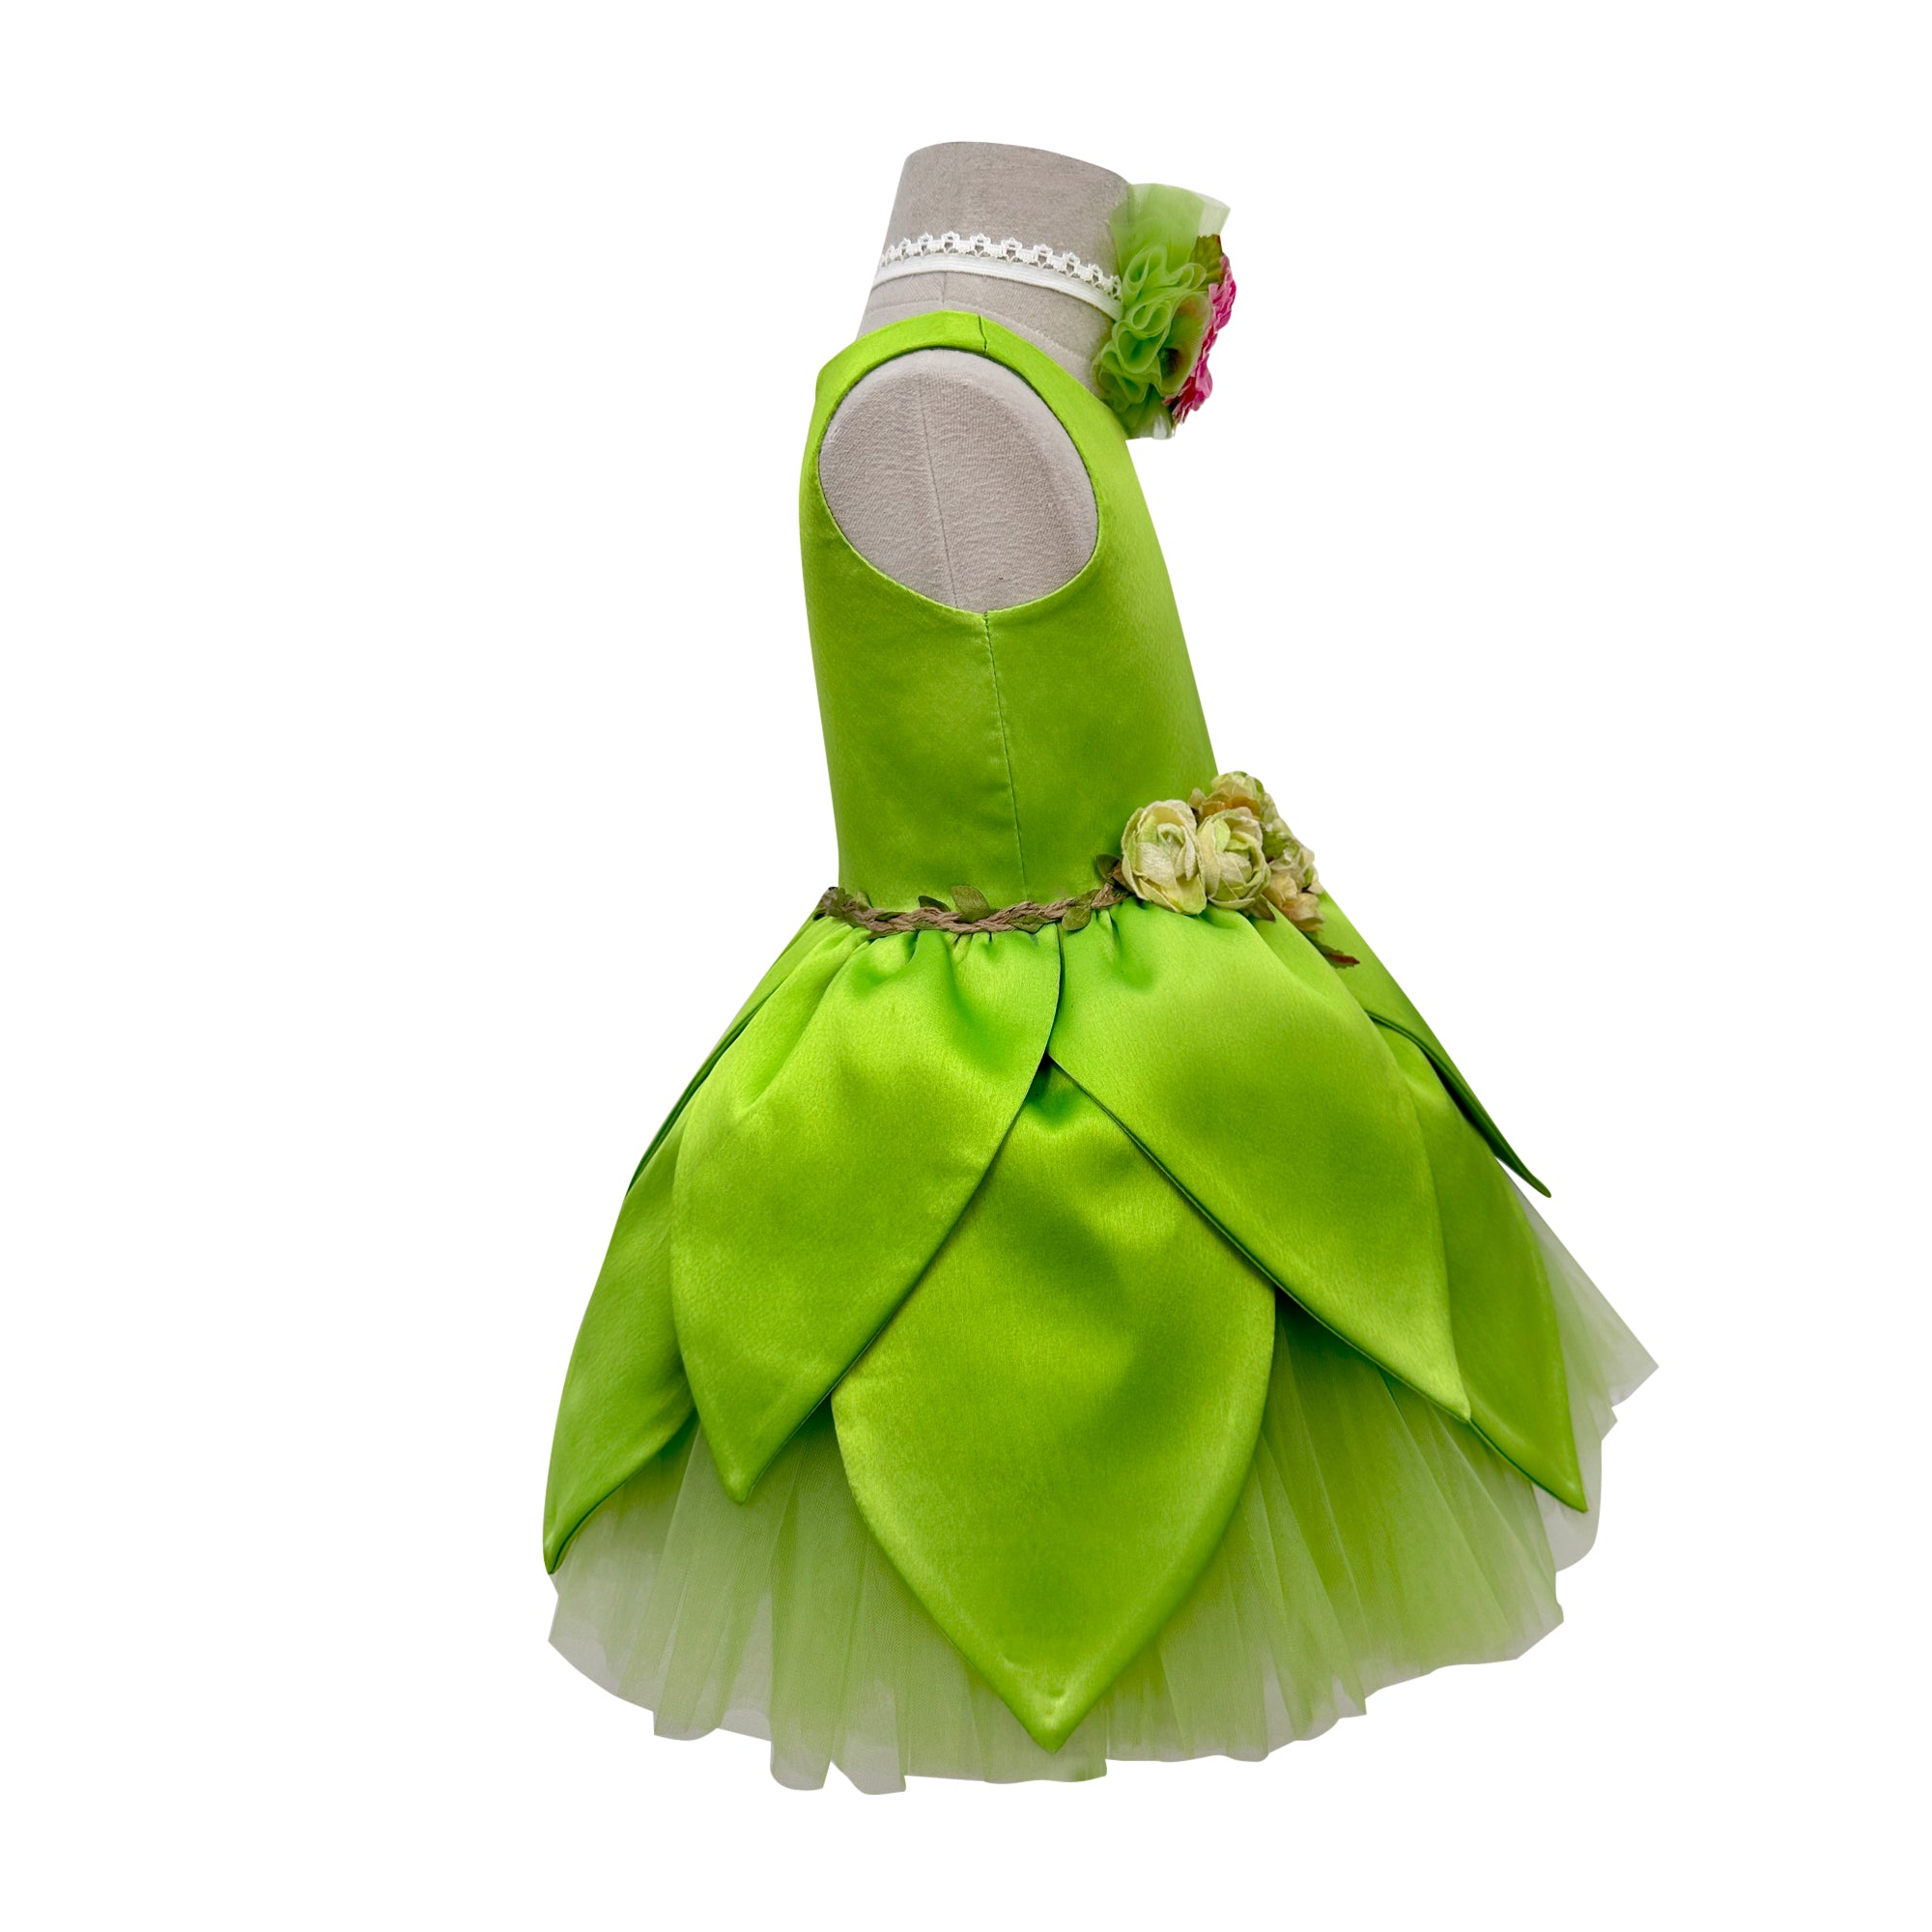 The Tinkerbell Dress